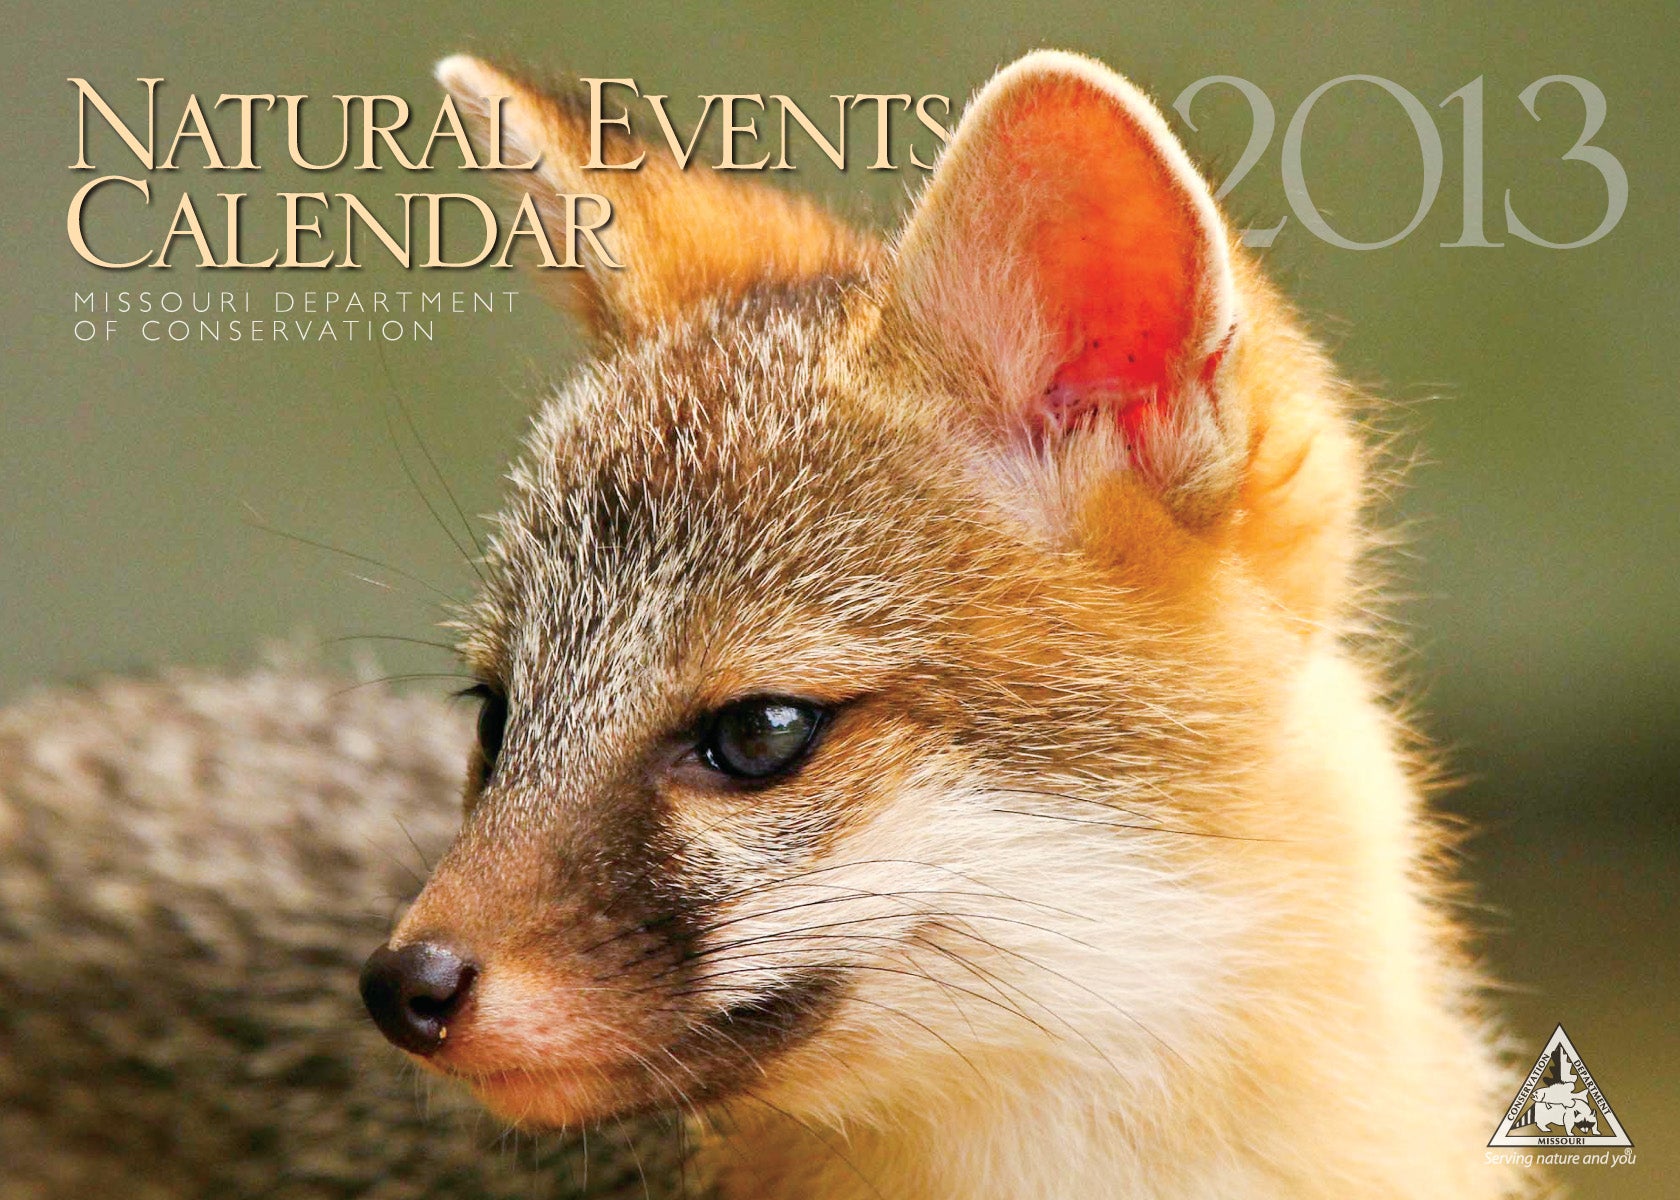 2013 Natural Events Calendar Cover